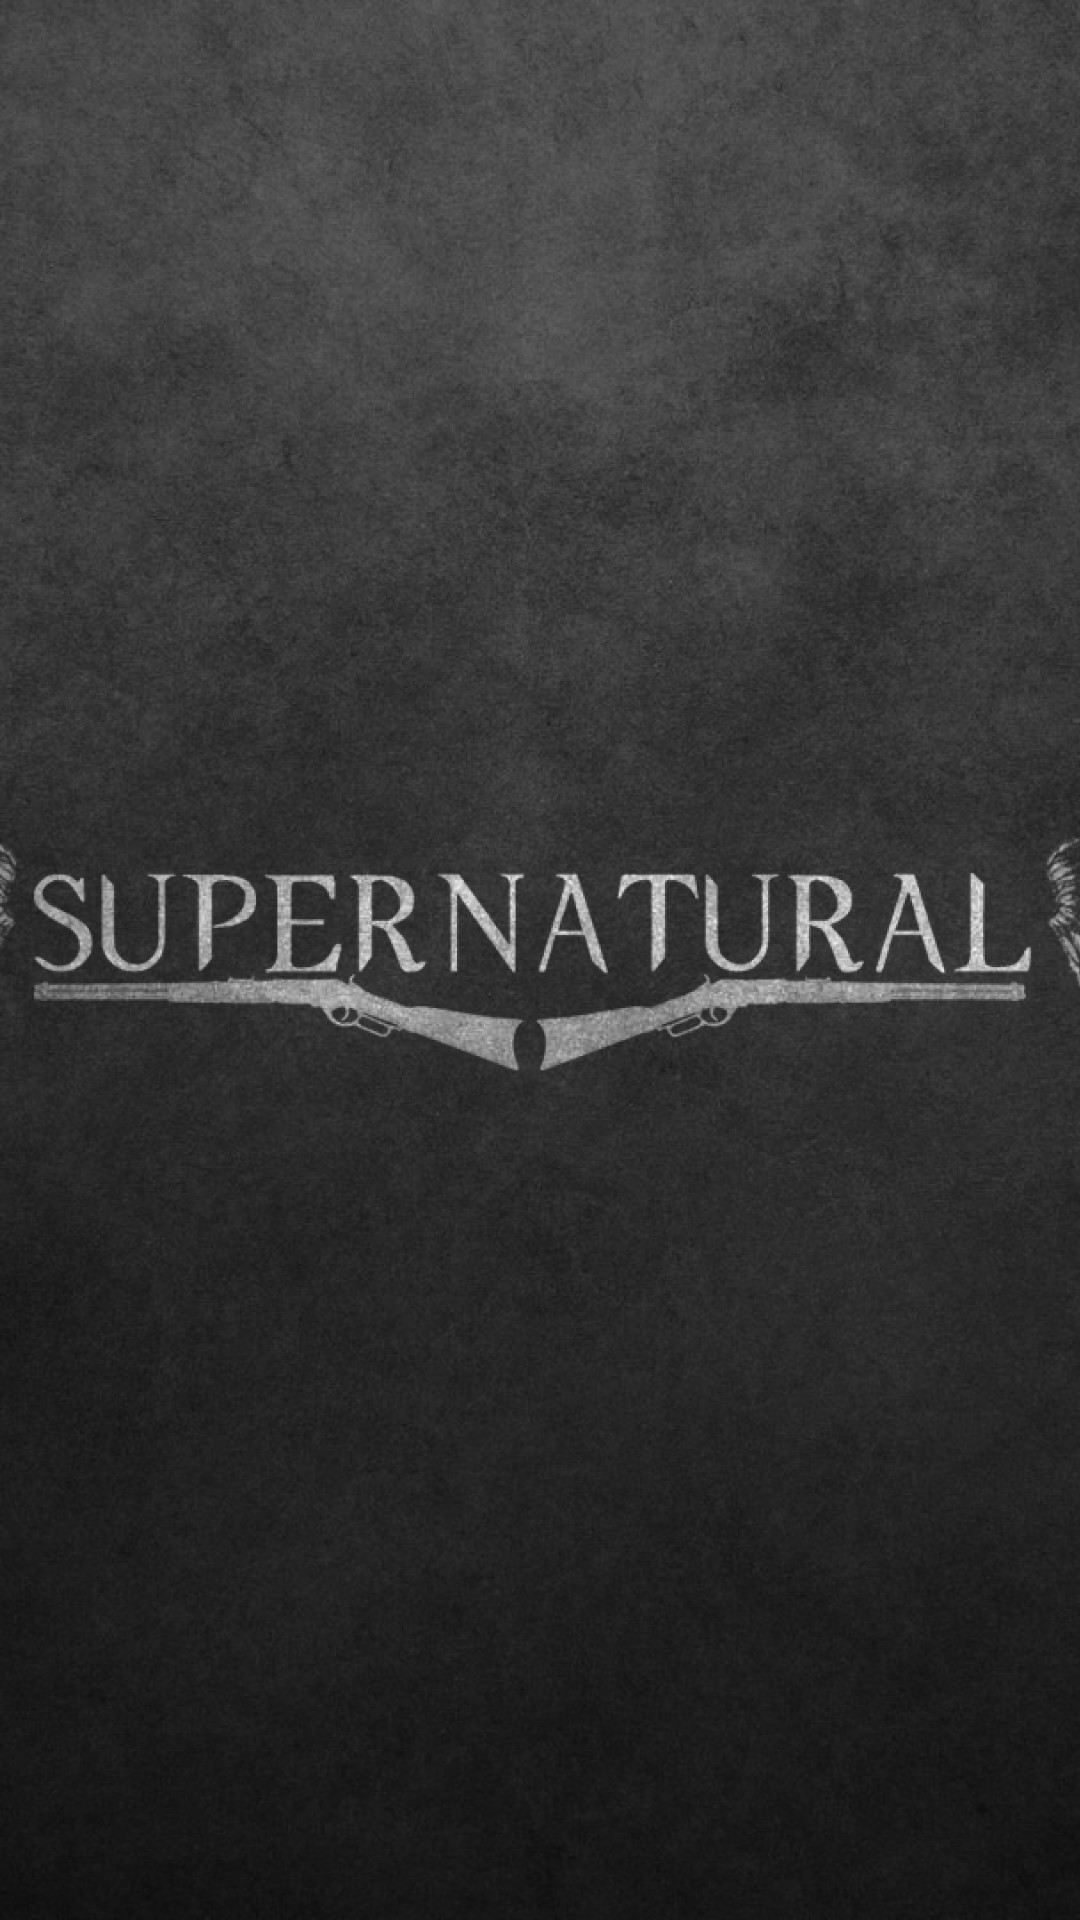 Supernatural Wallpaper Iphone Hd - HD Wallpaper 